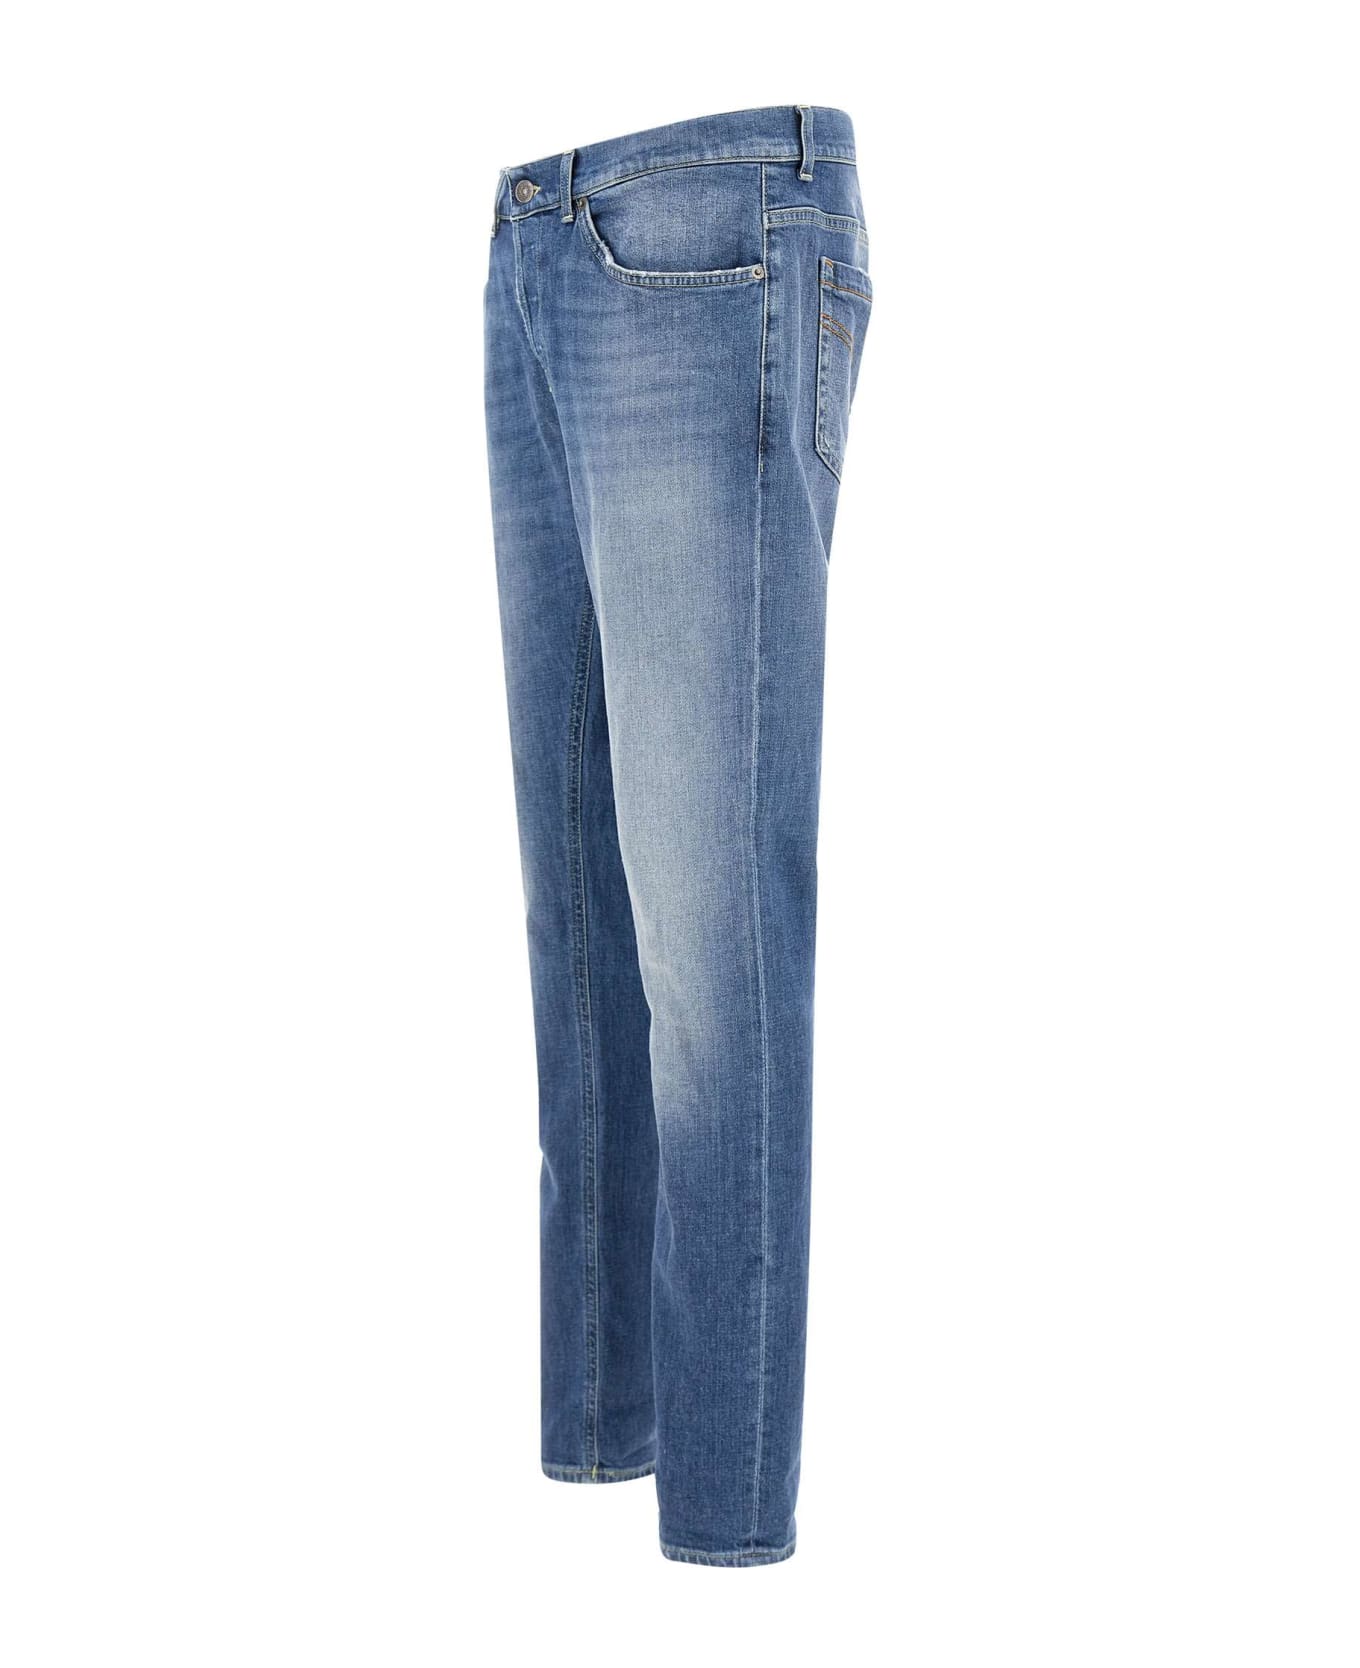 Dondup 'george' Jeans - BLUE